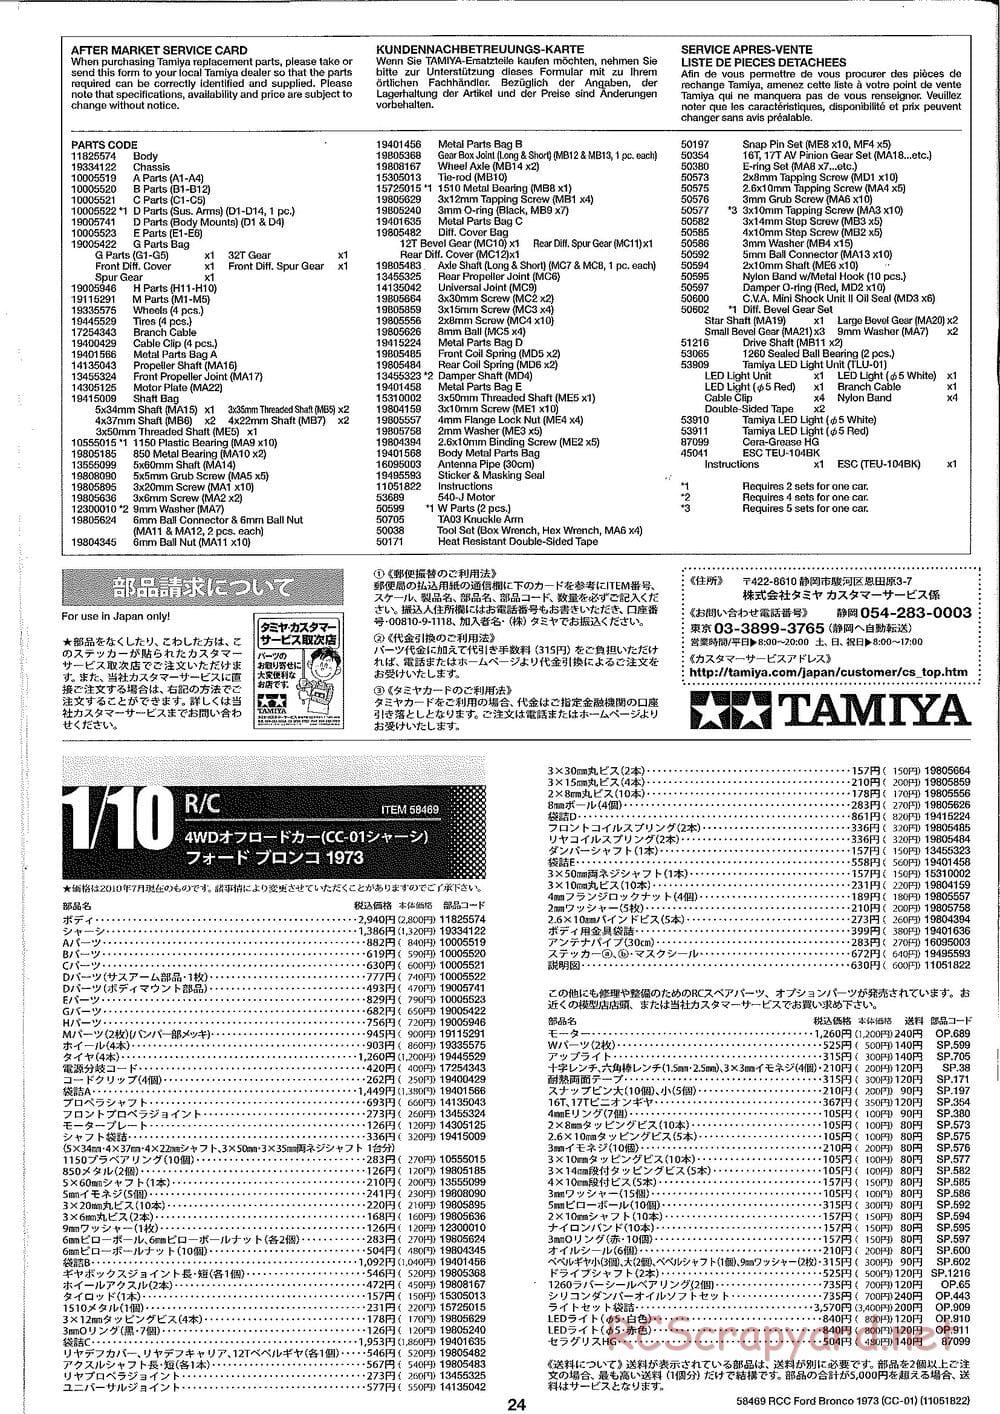 Tamiya - Ford Bronco 1973 - CC-01 Chassis - Manual - Page 24